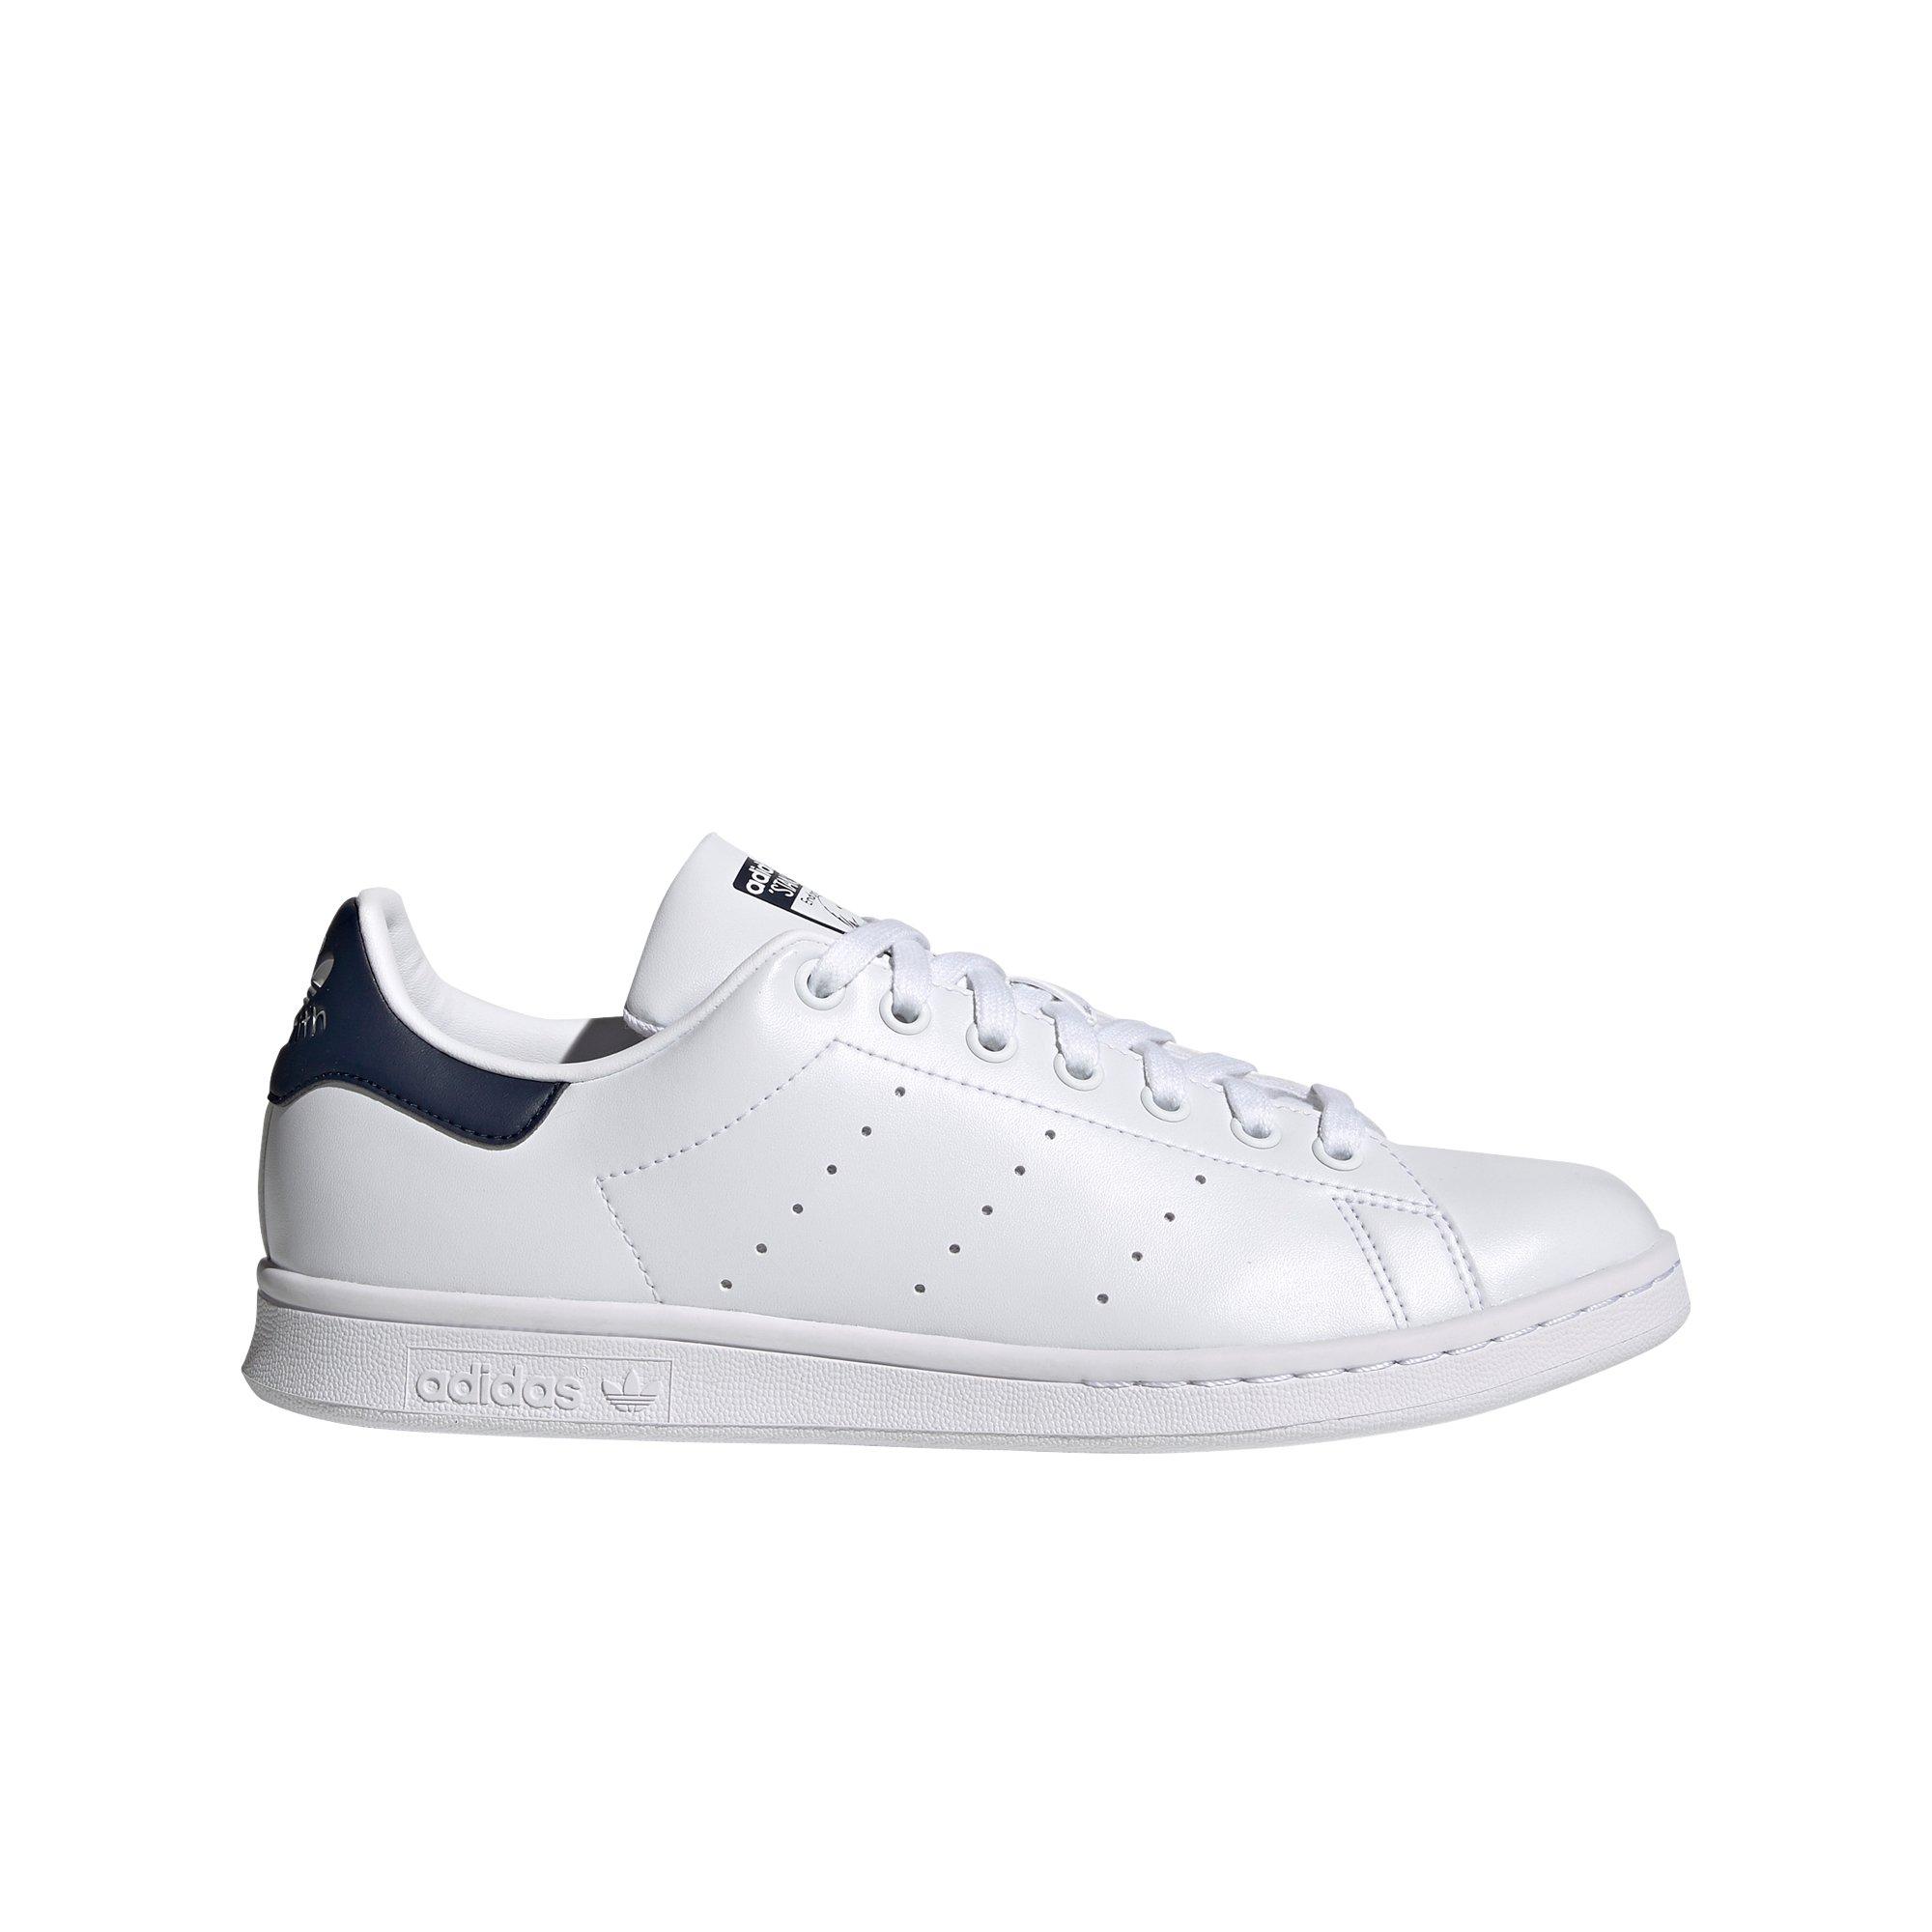 adidas Originals Stan Smith "White/Navy" Shoe